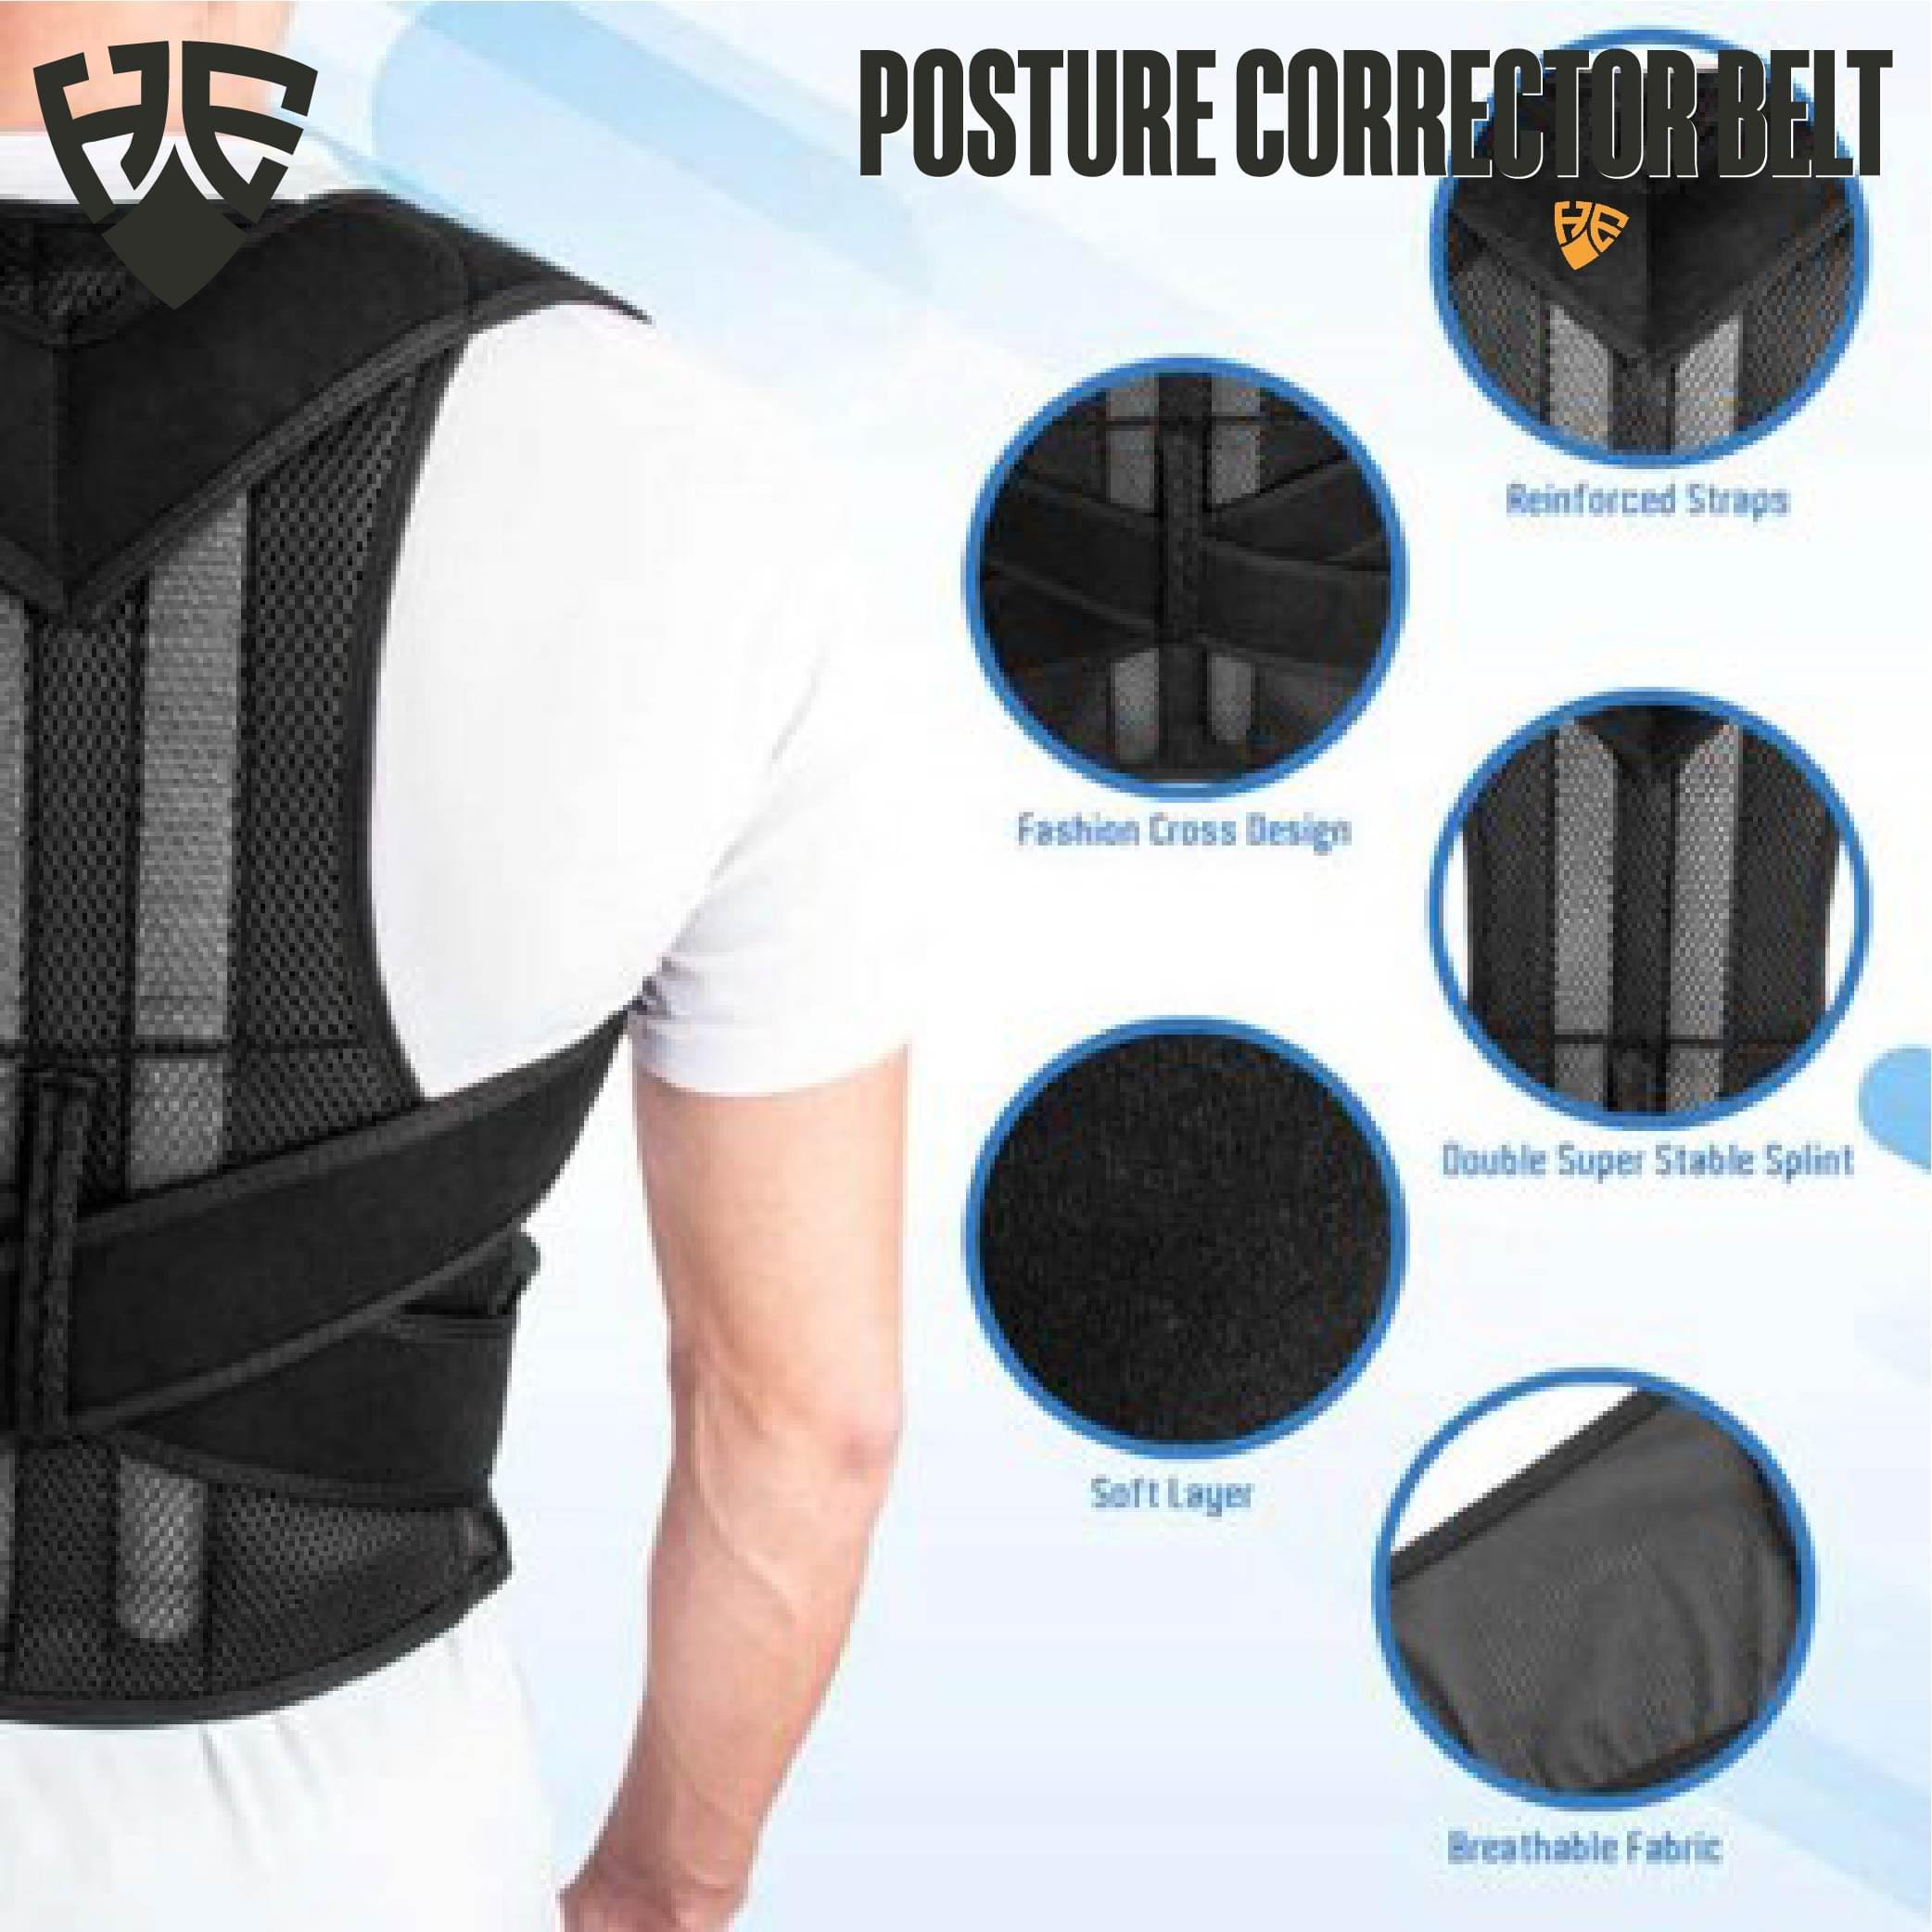 Full Back Posture Corrector Belt